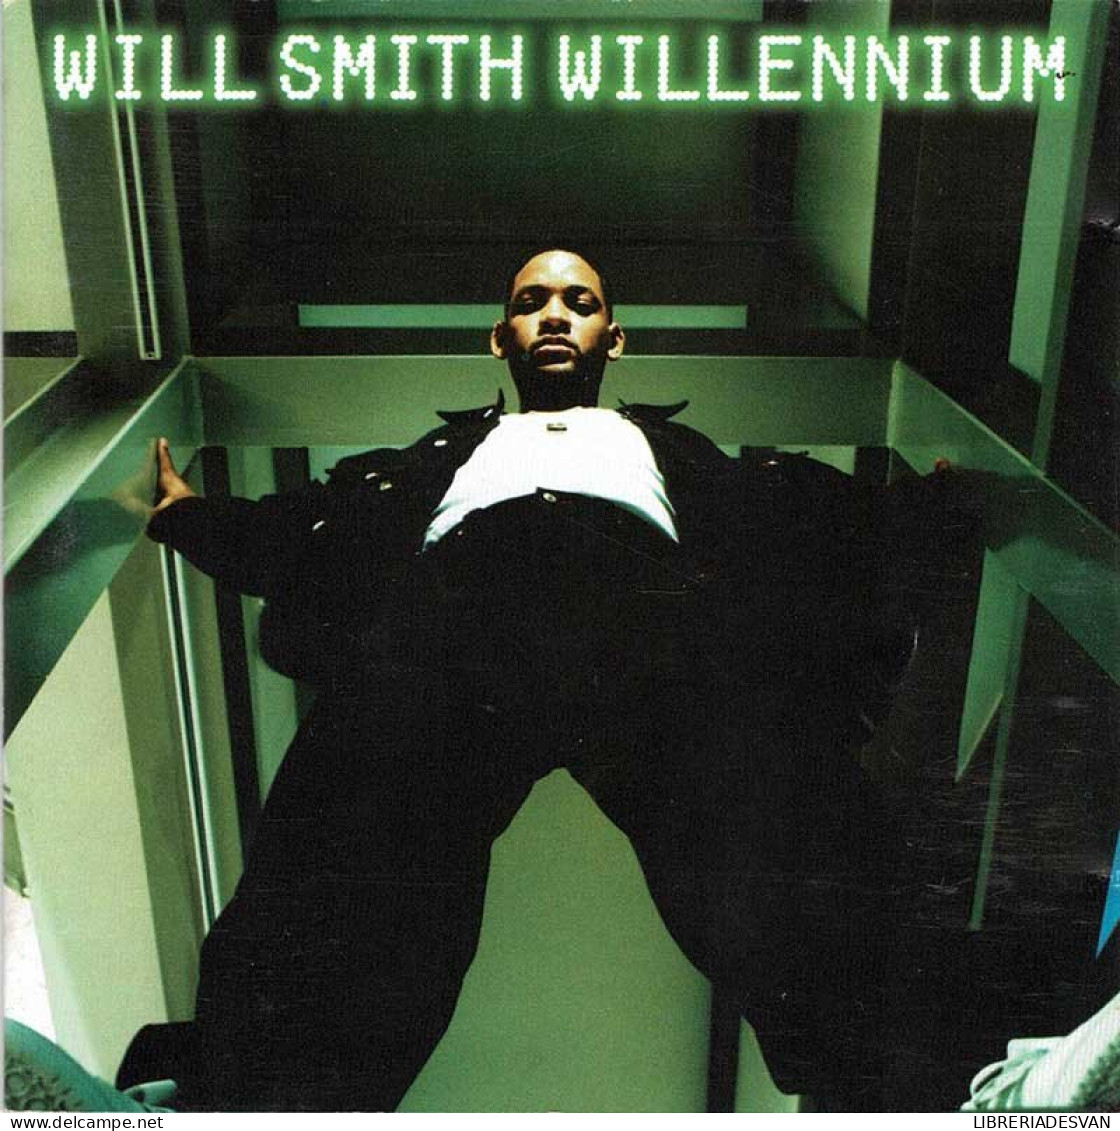 Will Smith - Willennium. CD - Rap & Hip Hop